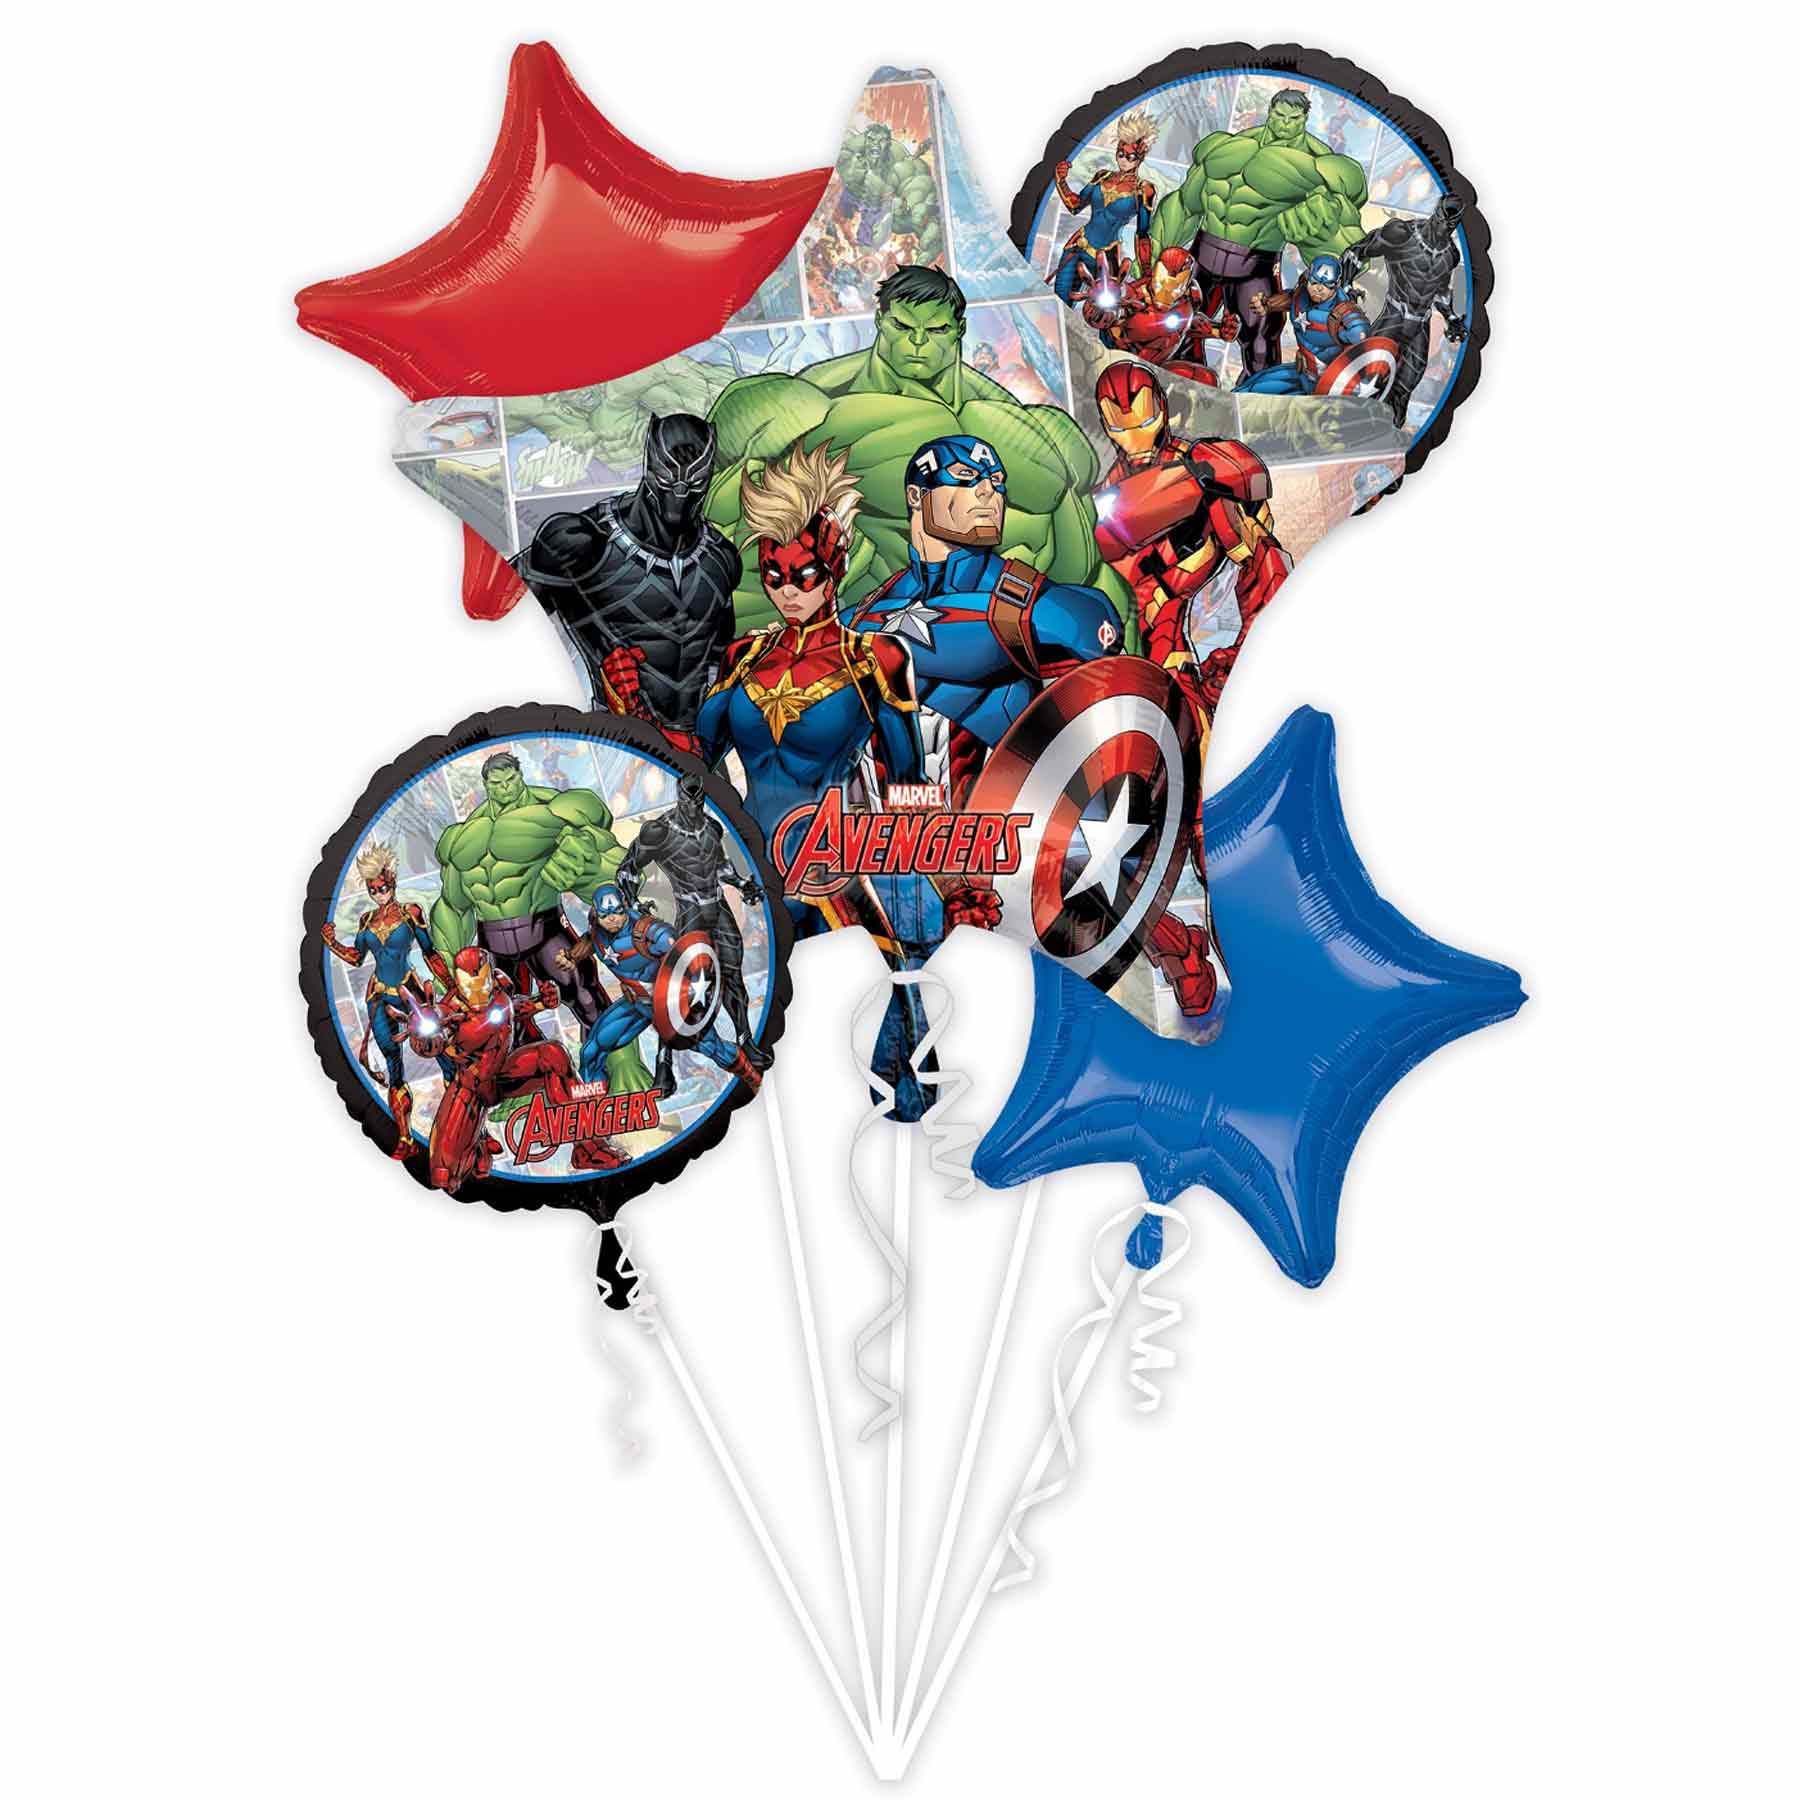 Avengers Marvel Powers Unite Balloon Bouquet 5pcs Balloons & Streamers - Party Centre